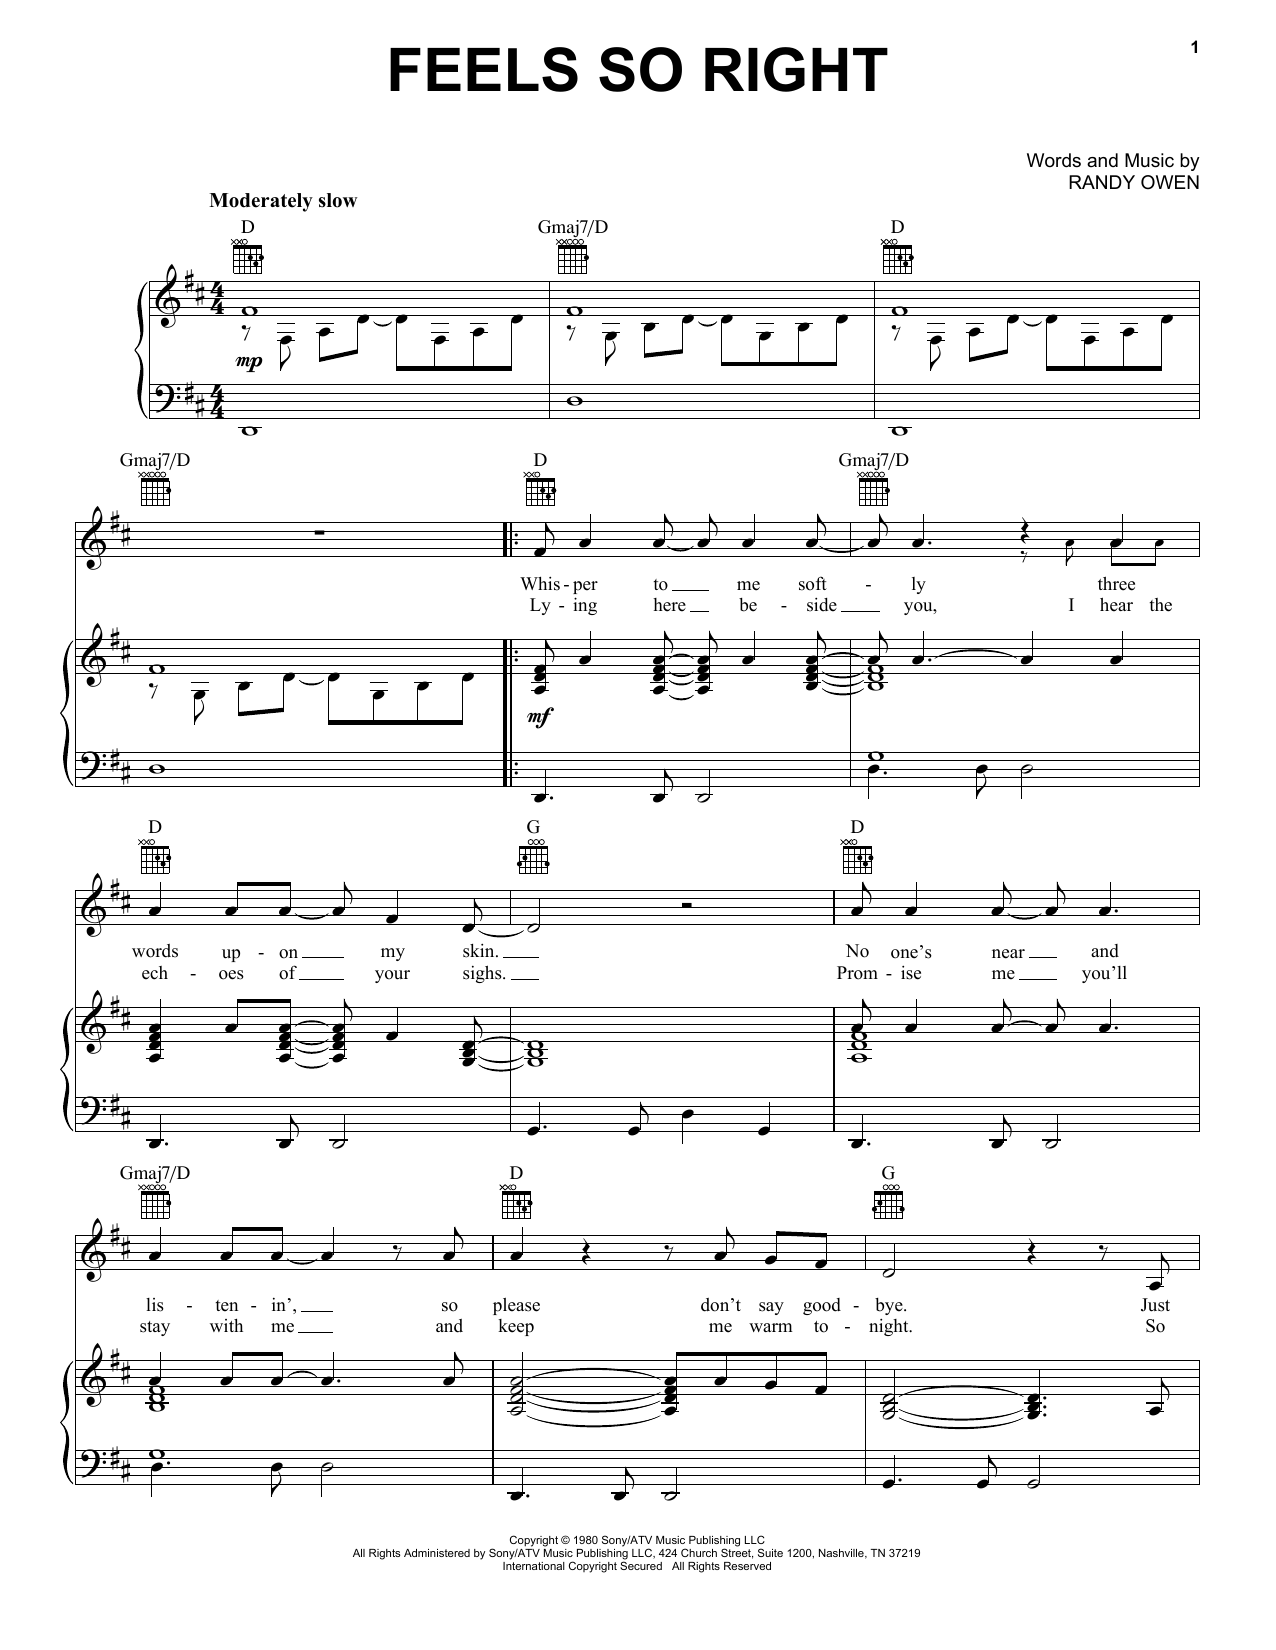 Alabama Feels So Right sheet music notes printable PDF score